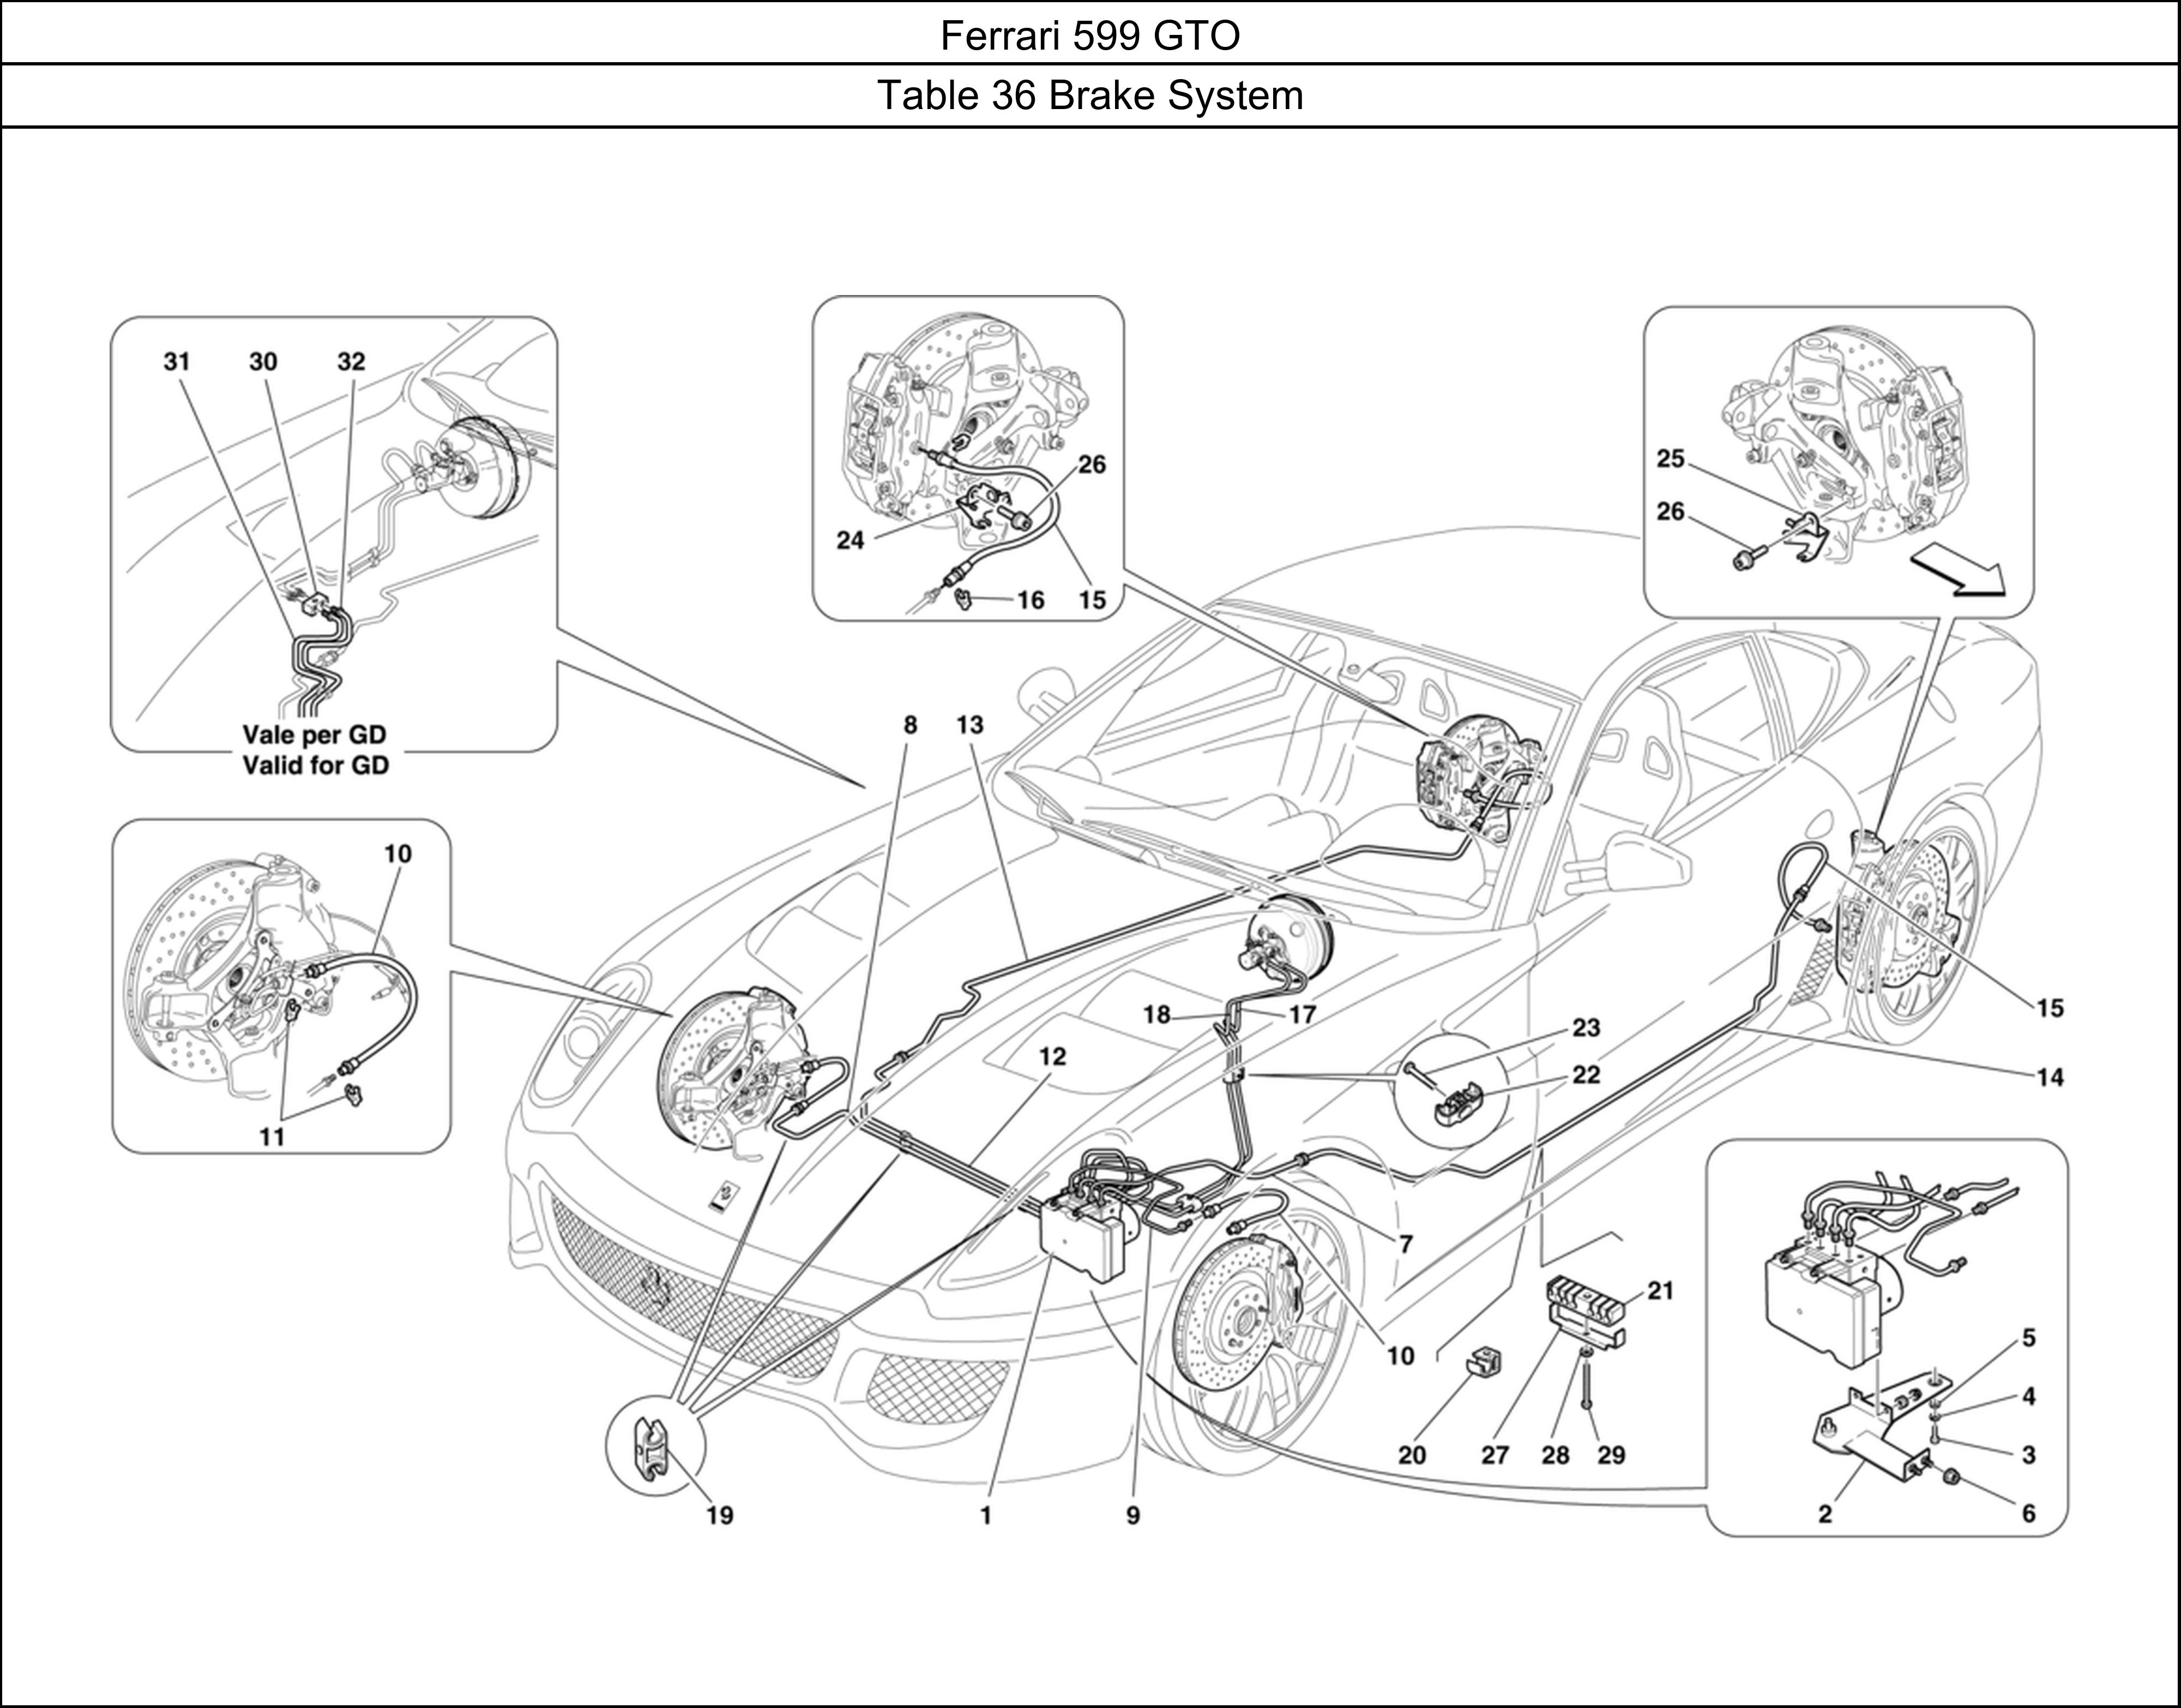 Ferrari Parts Ferrari 599 GTO Table 36 Brake System